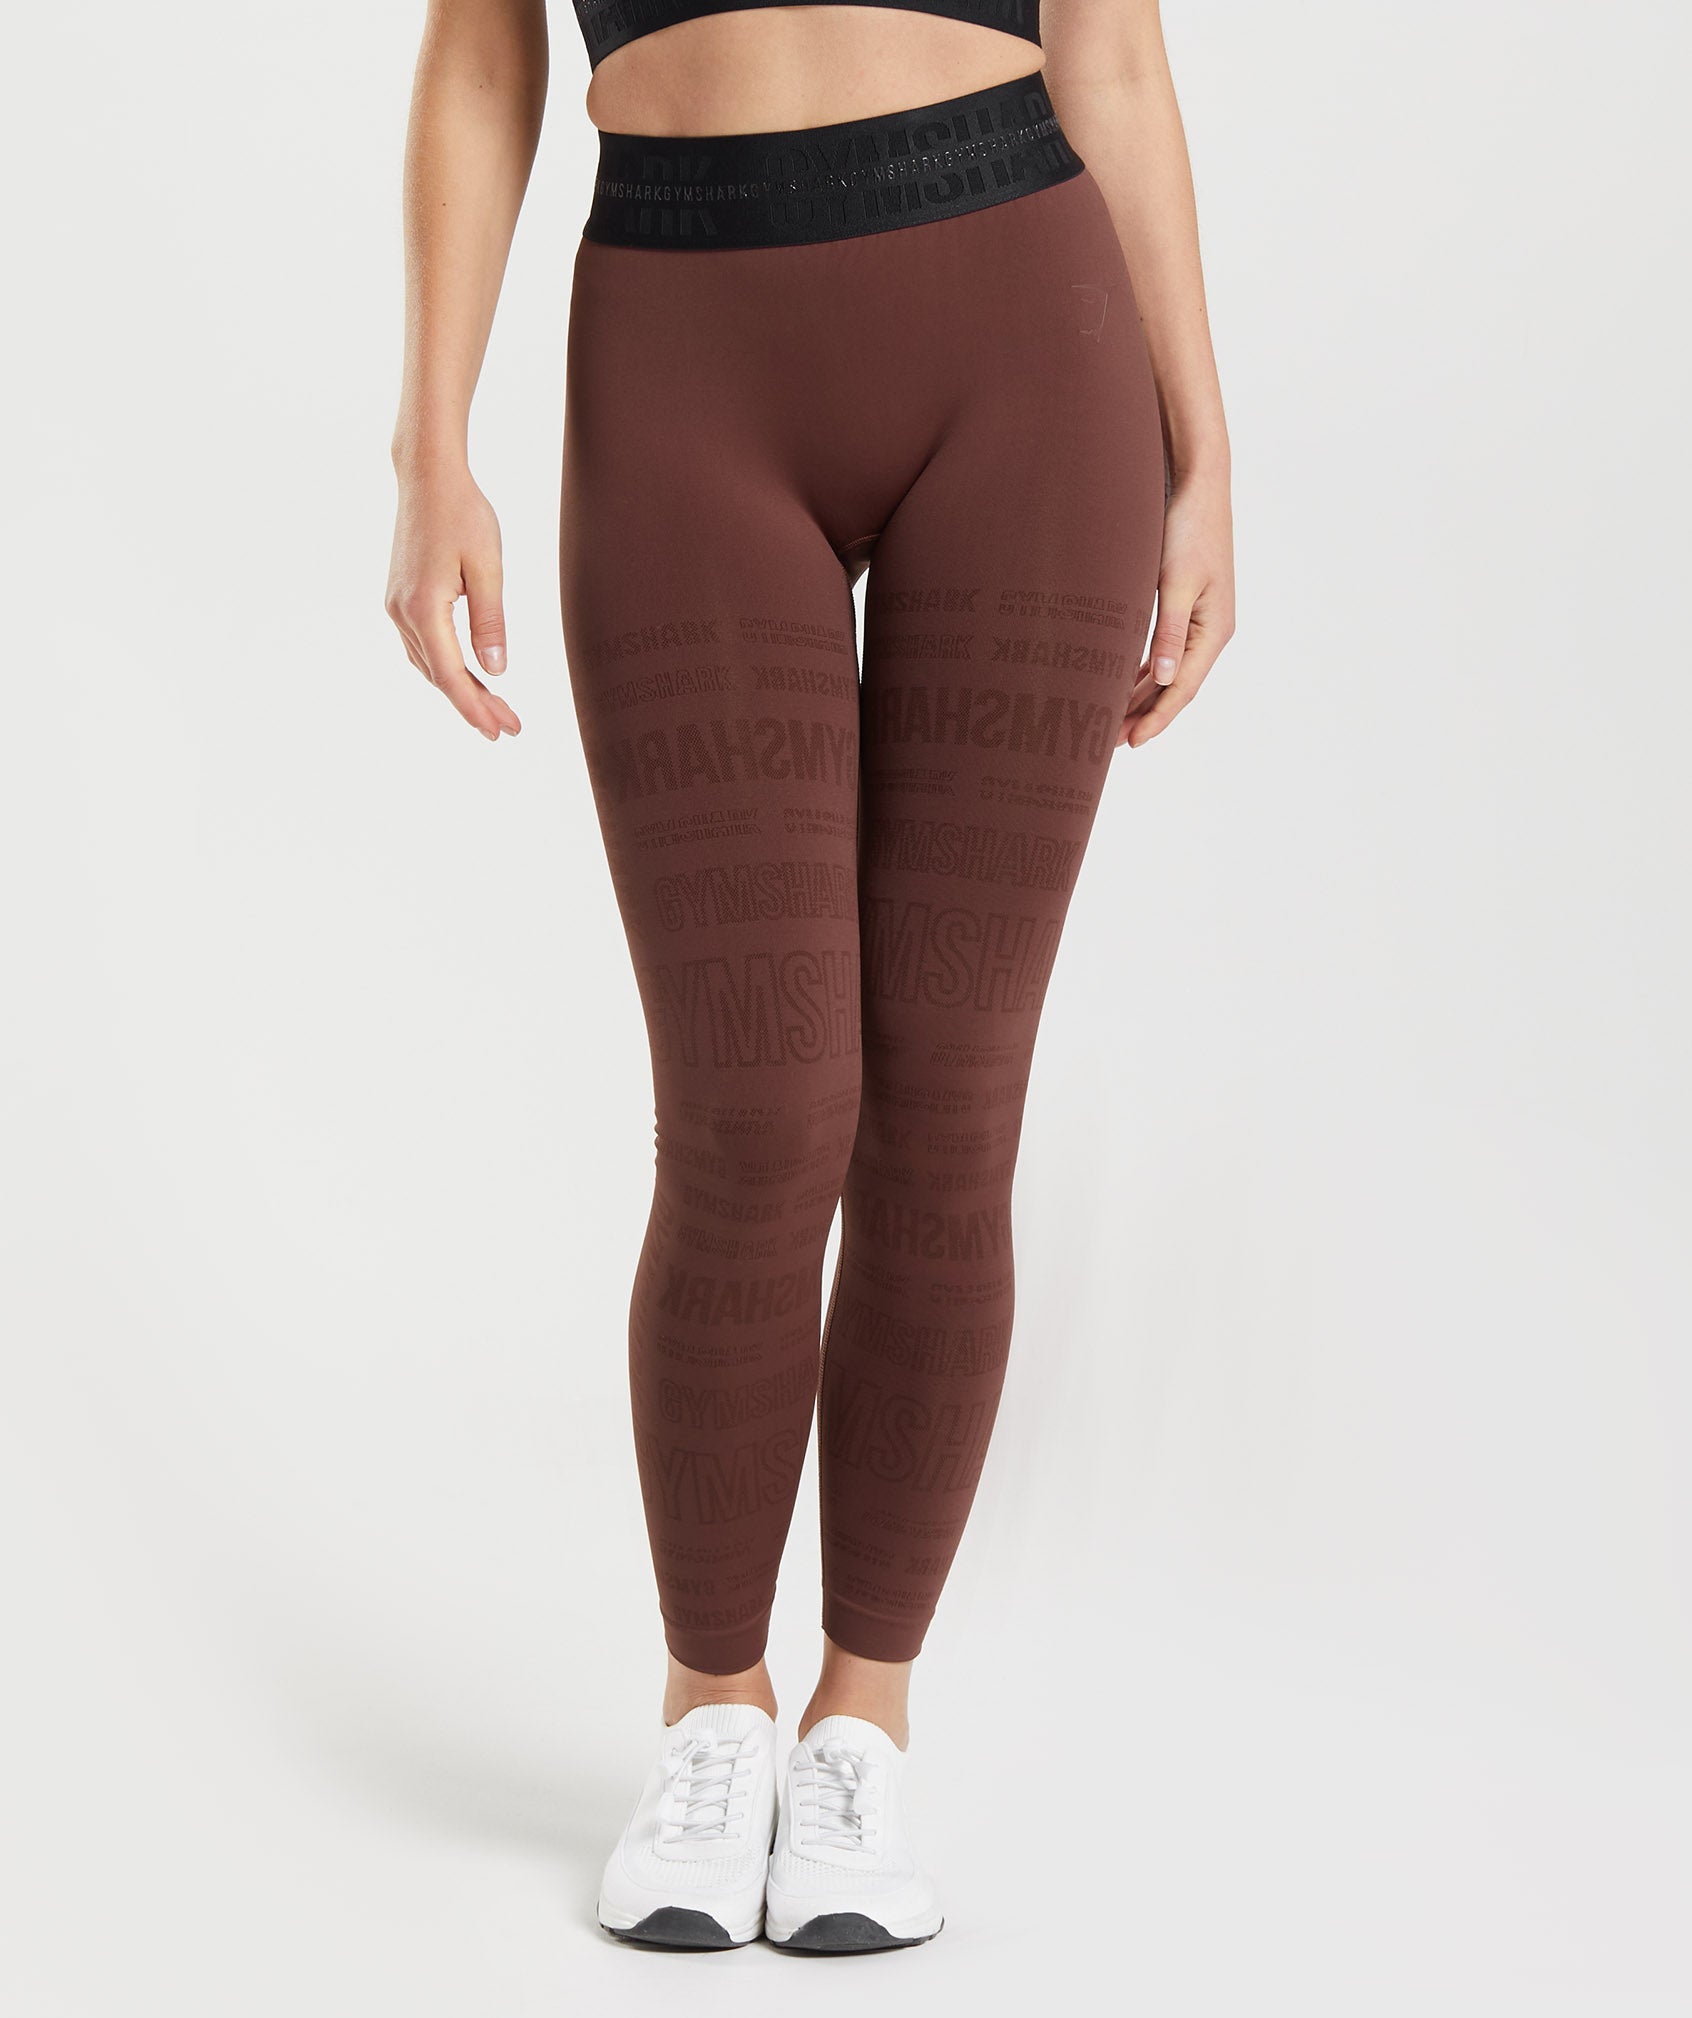 GymShark Women's Brown Leggings Activewear Size Small & Medium JFI001 NG 10